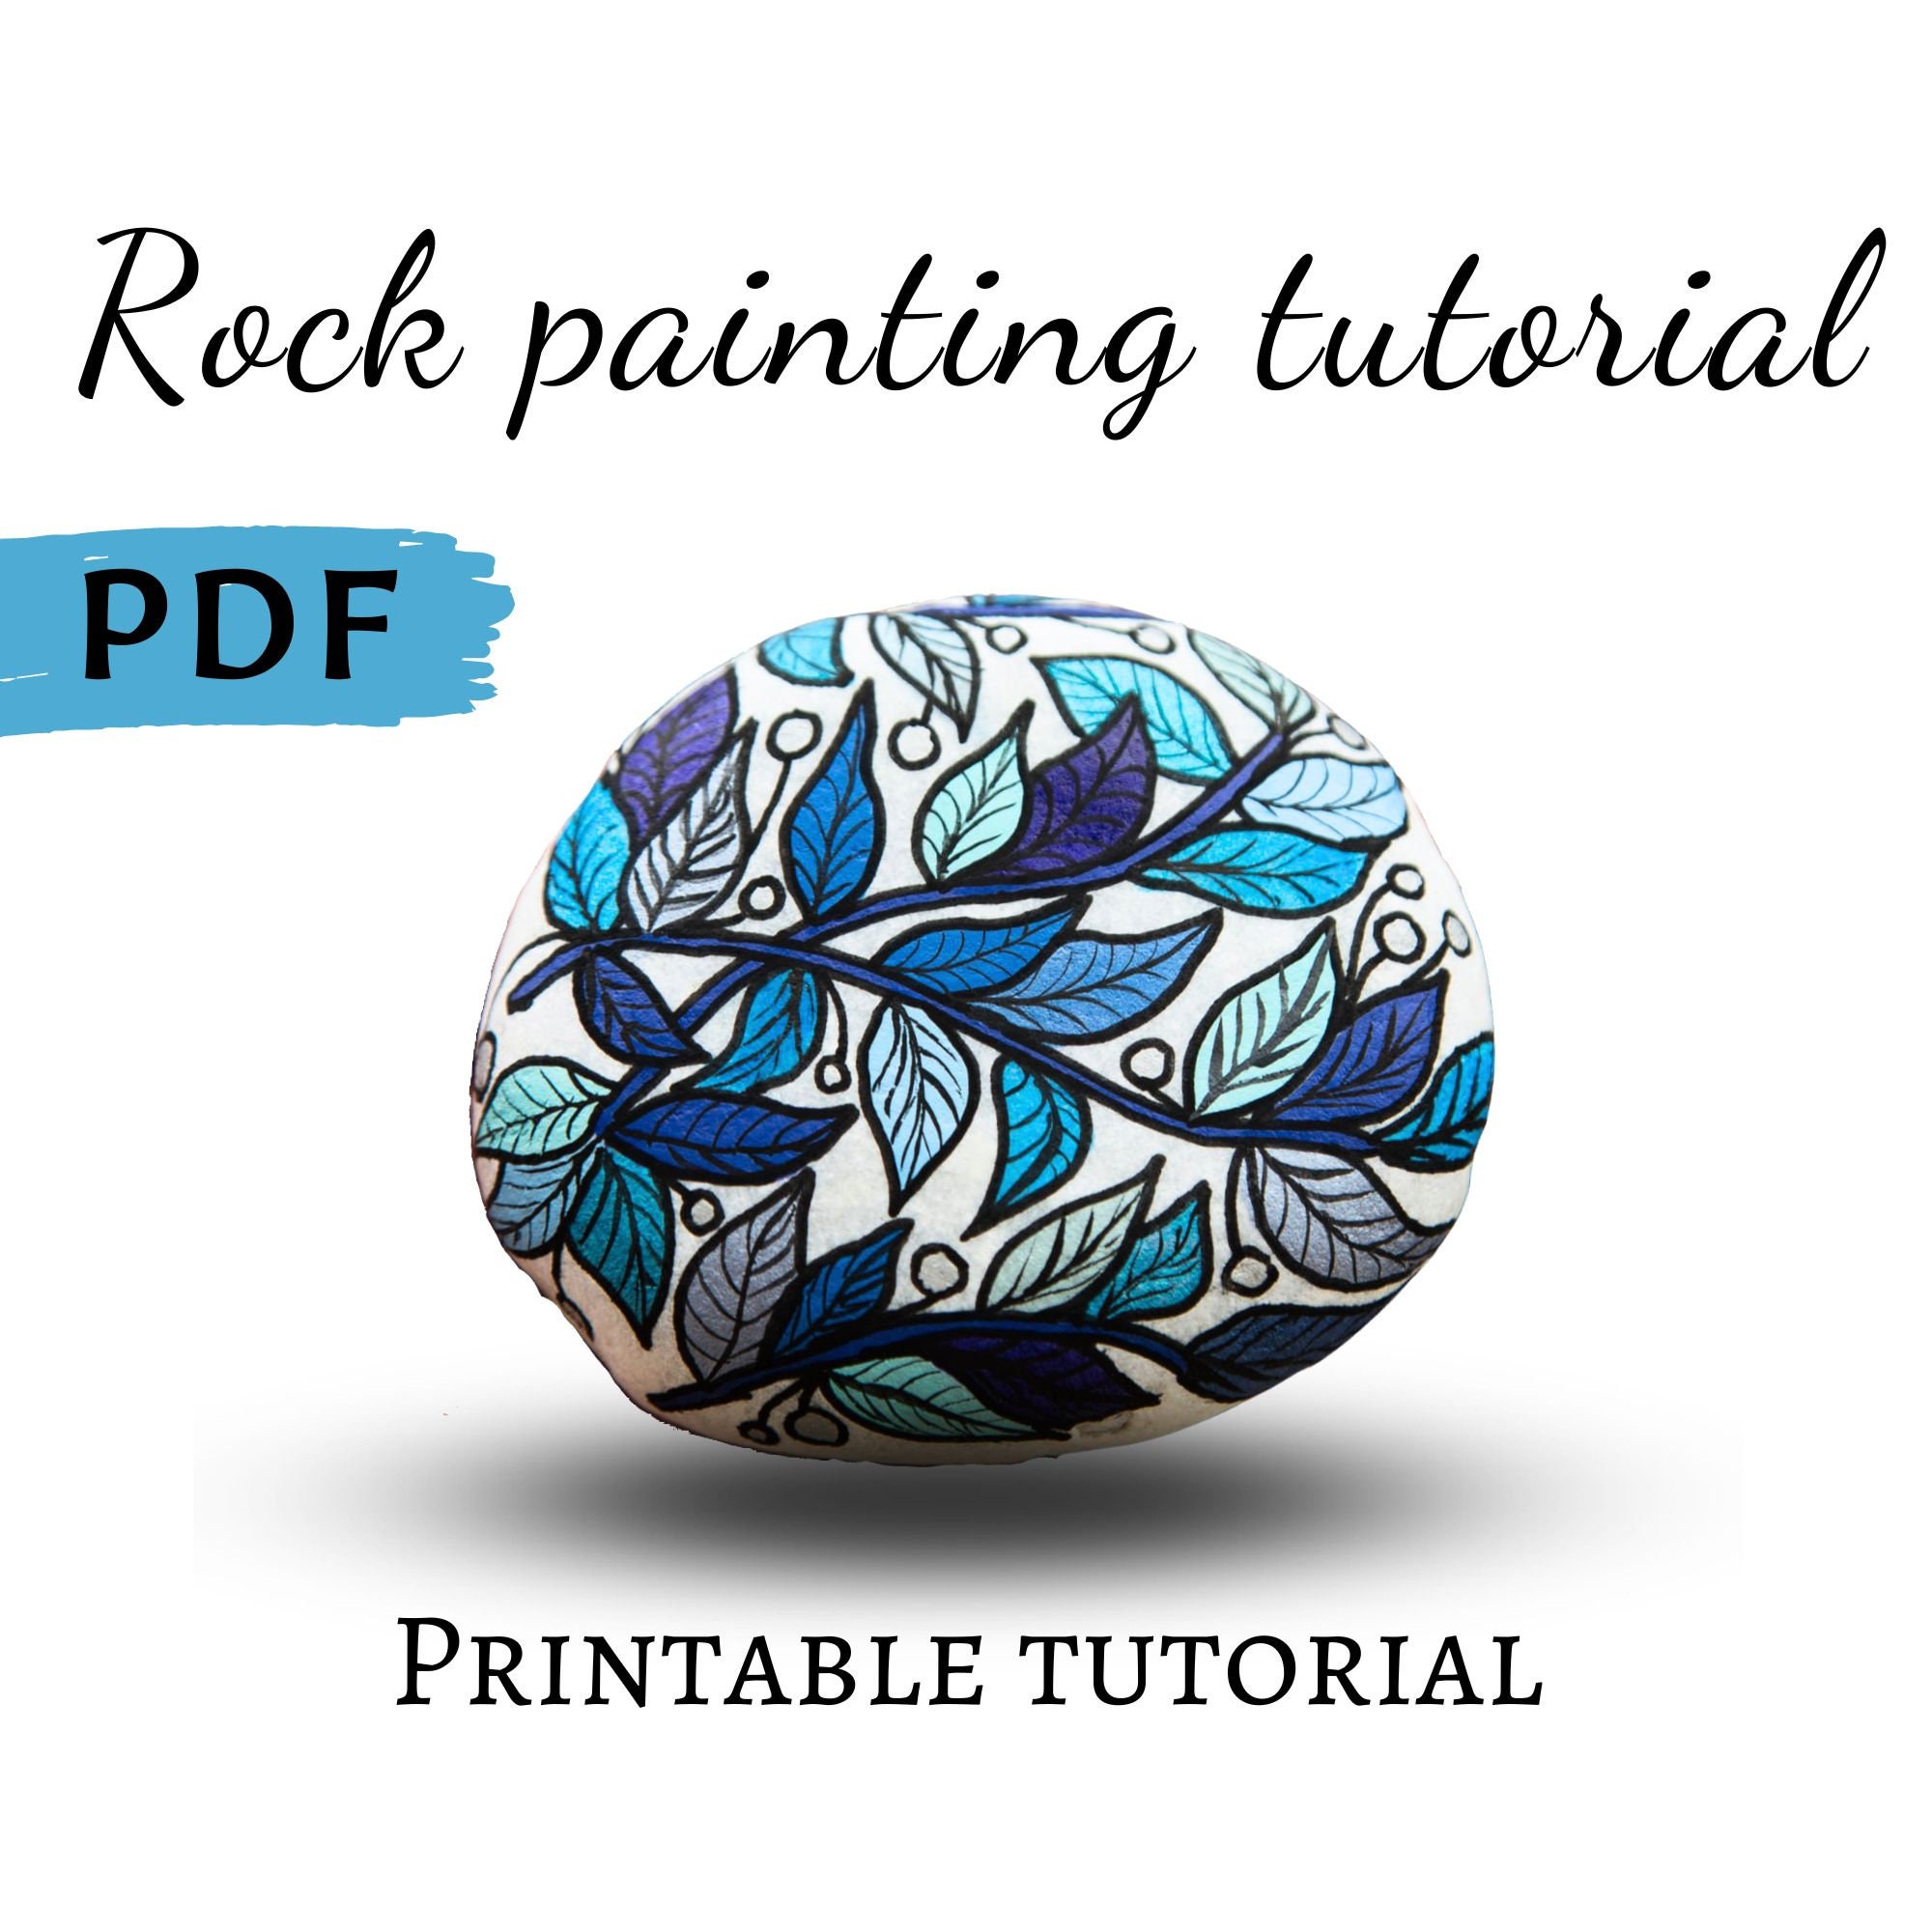 13 Dot Painting Tools Mandala Rock Tools Dotting Tools Ball Stylus